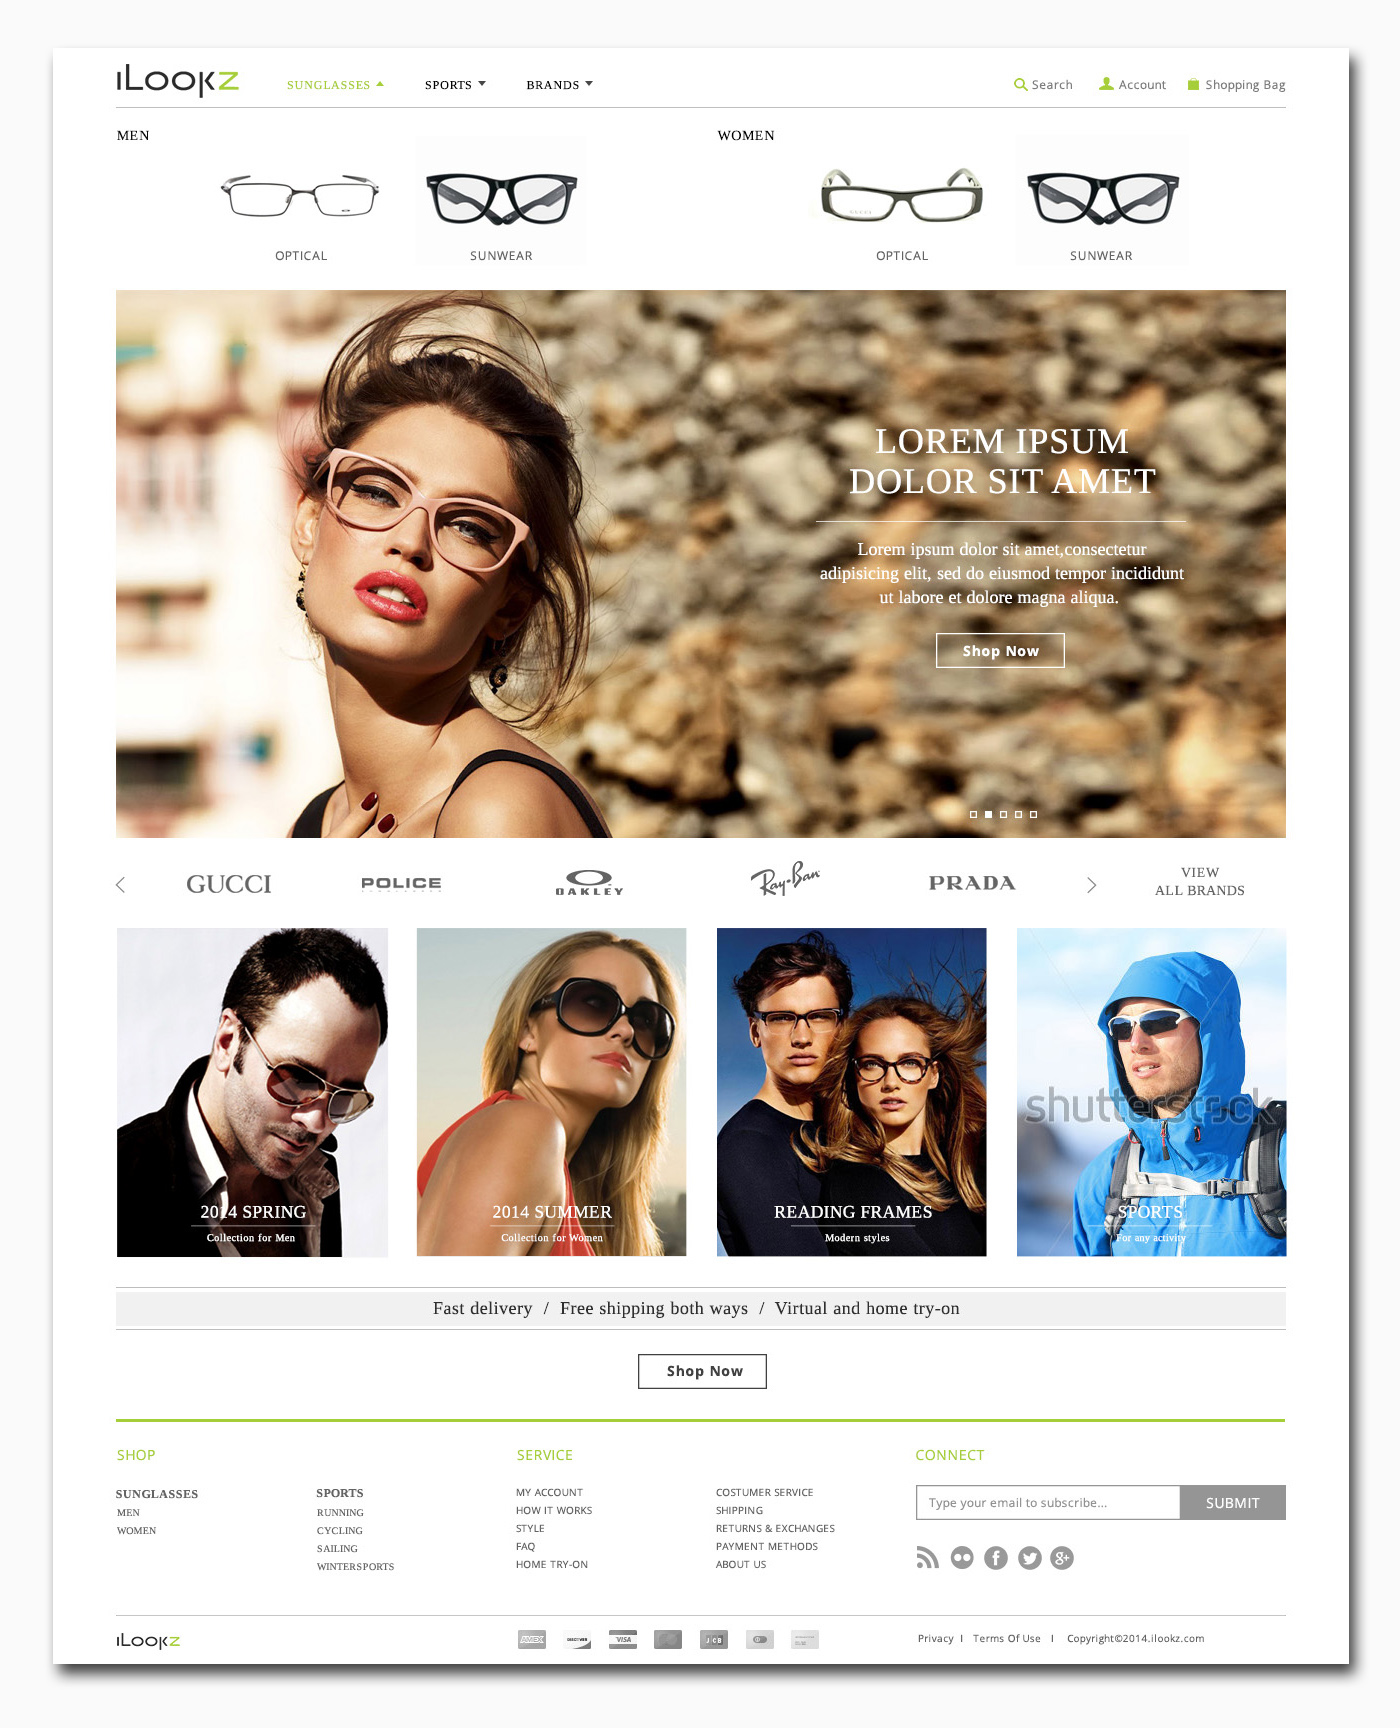 eyeglasses eyewear iLookz Eyewear shop webshop Online shop eyewear web shop Sunglasses optical glasses fashion web design fashion web shop